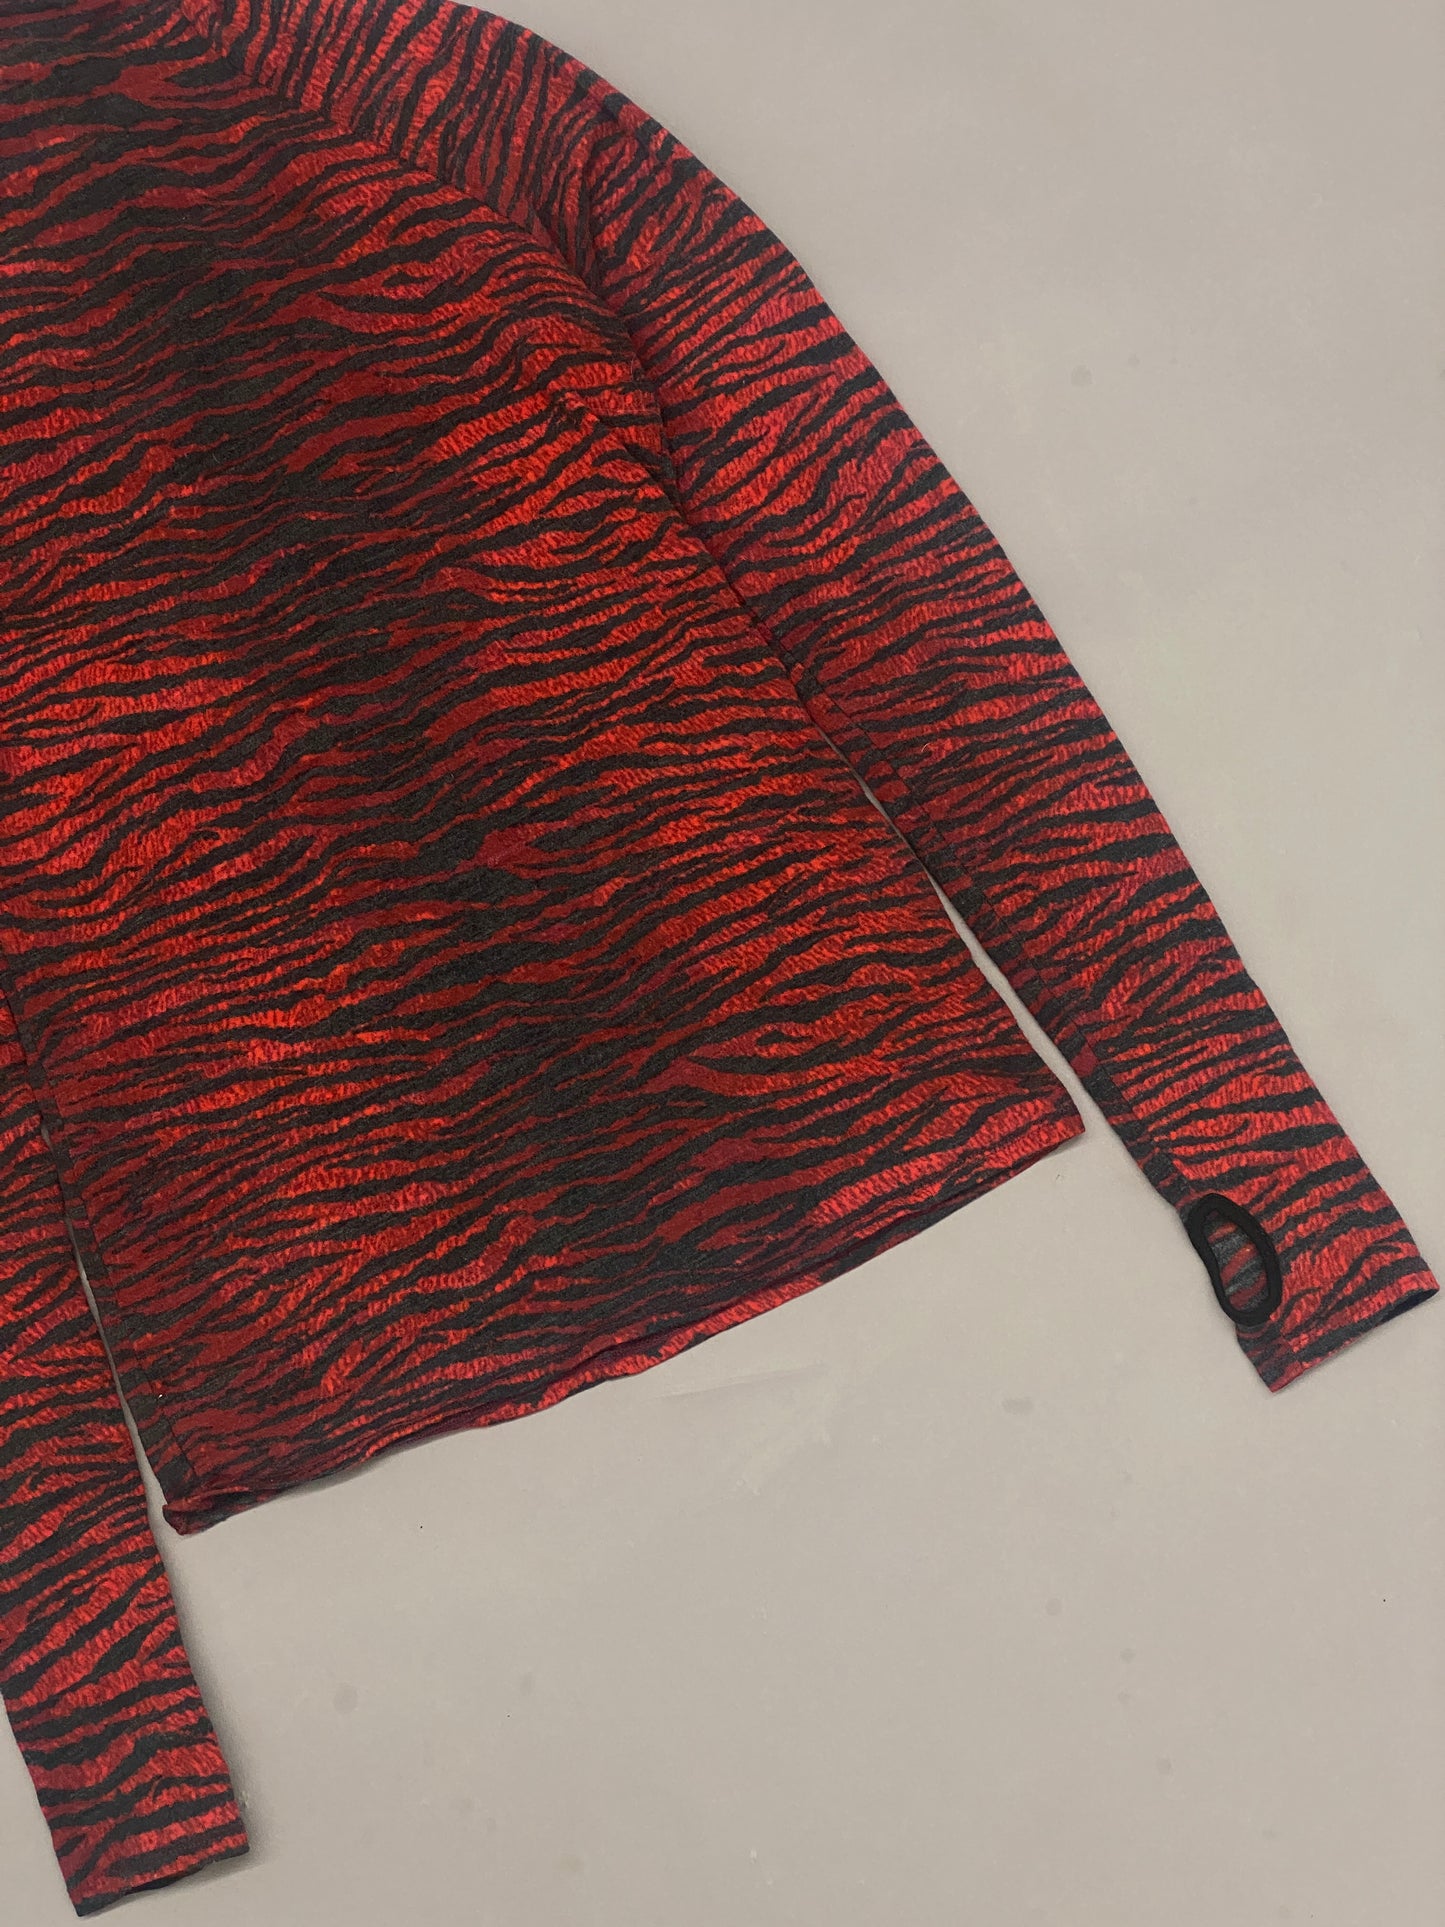 Kenzo x HM Animal Print Red Long Sleeve Top